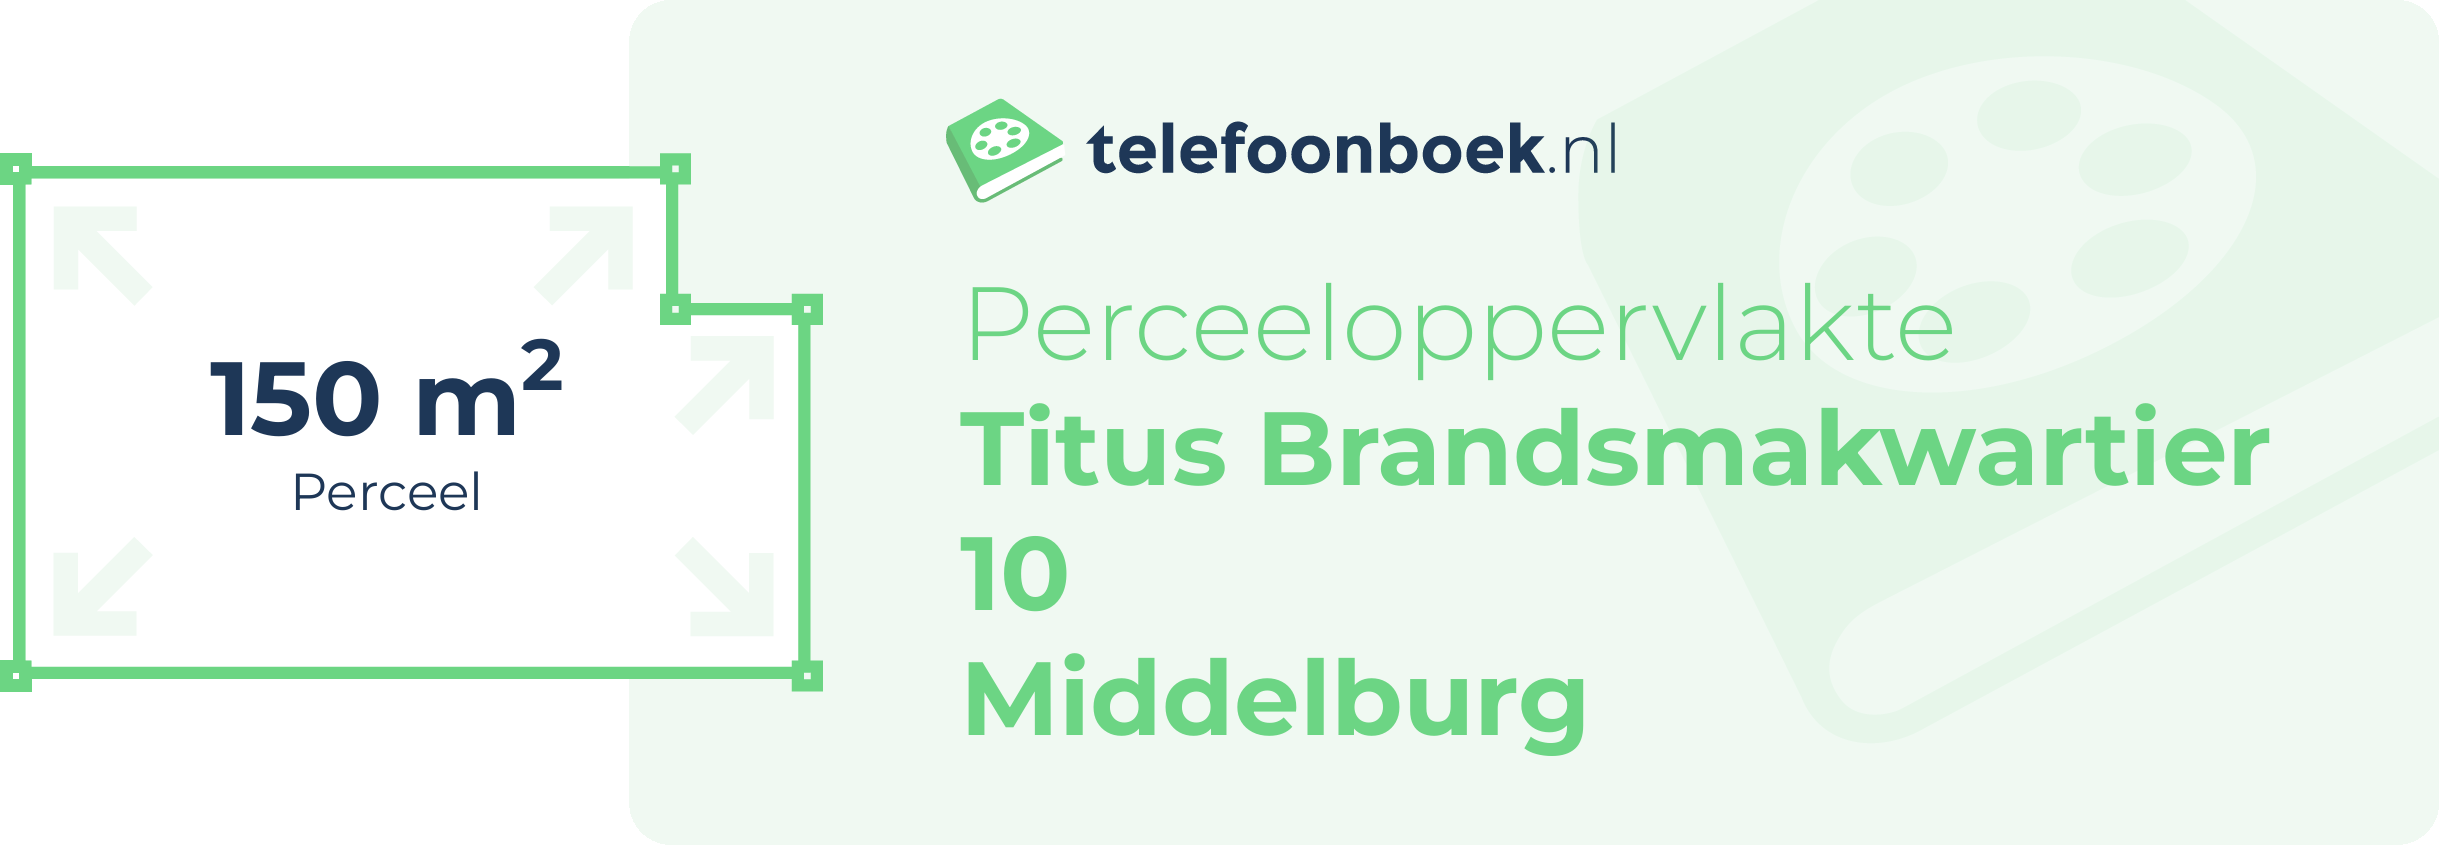 Perceeloppervlakte Titus Brandsmakwartier 10 Middelburg